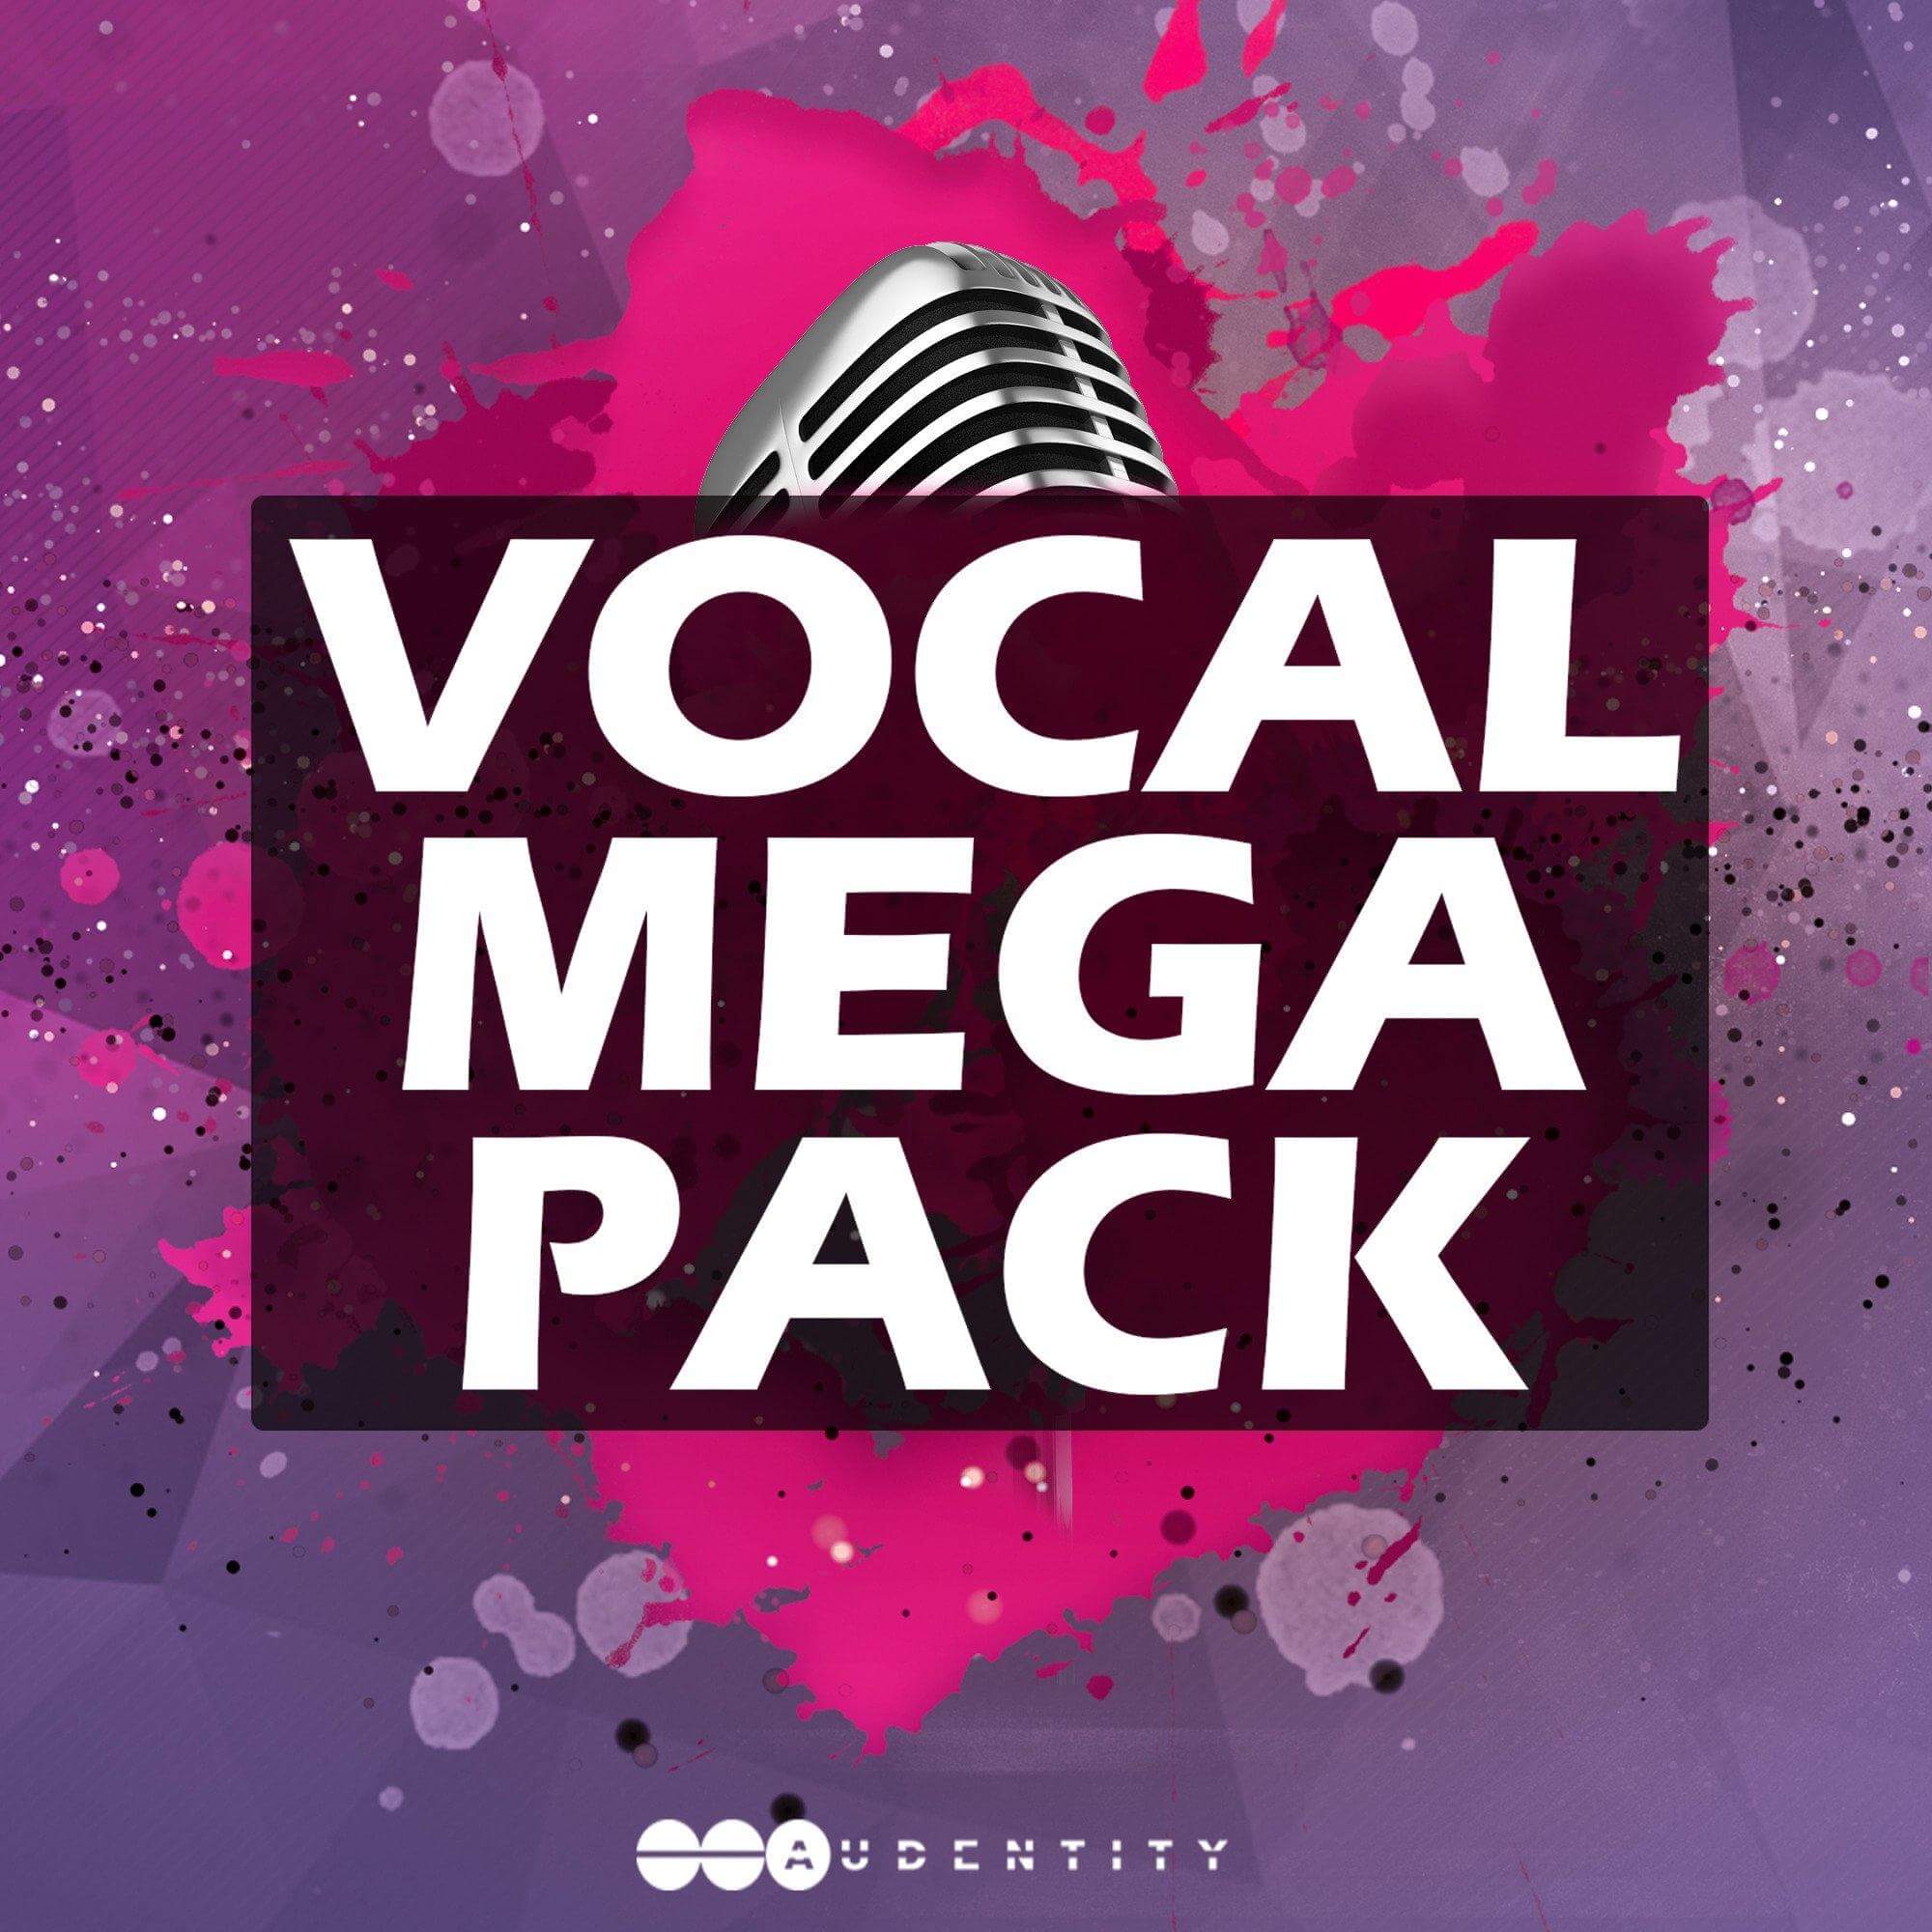 Audentity Records – Vocal Megapack full torrent